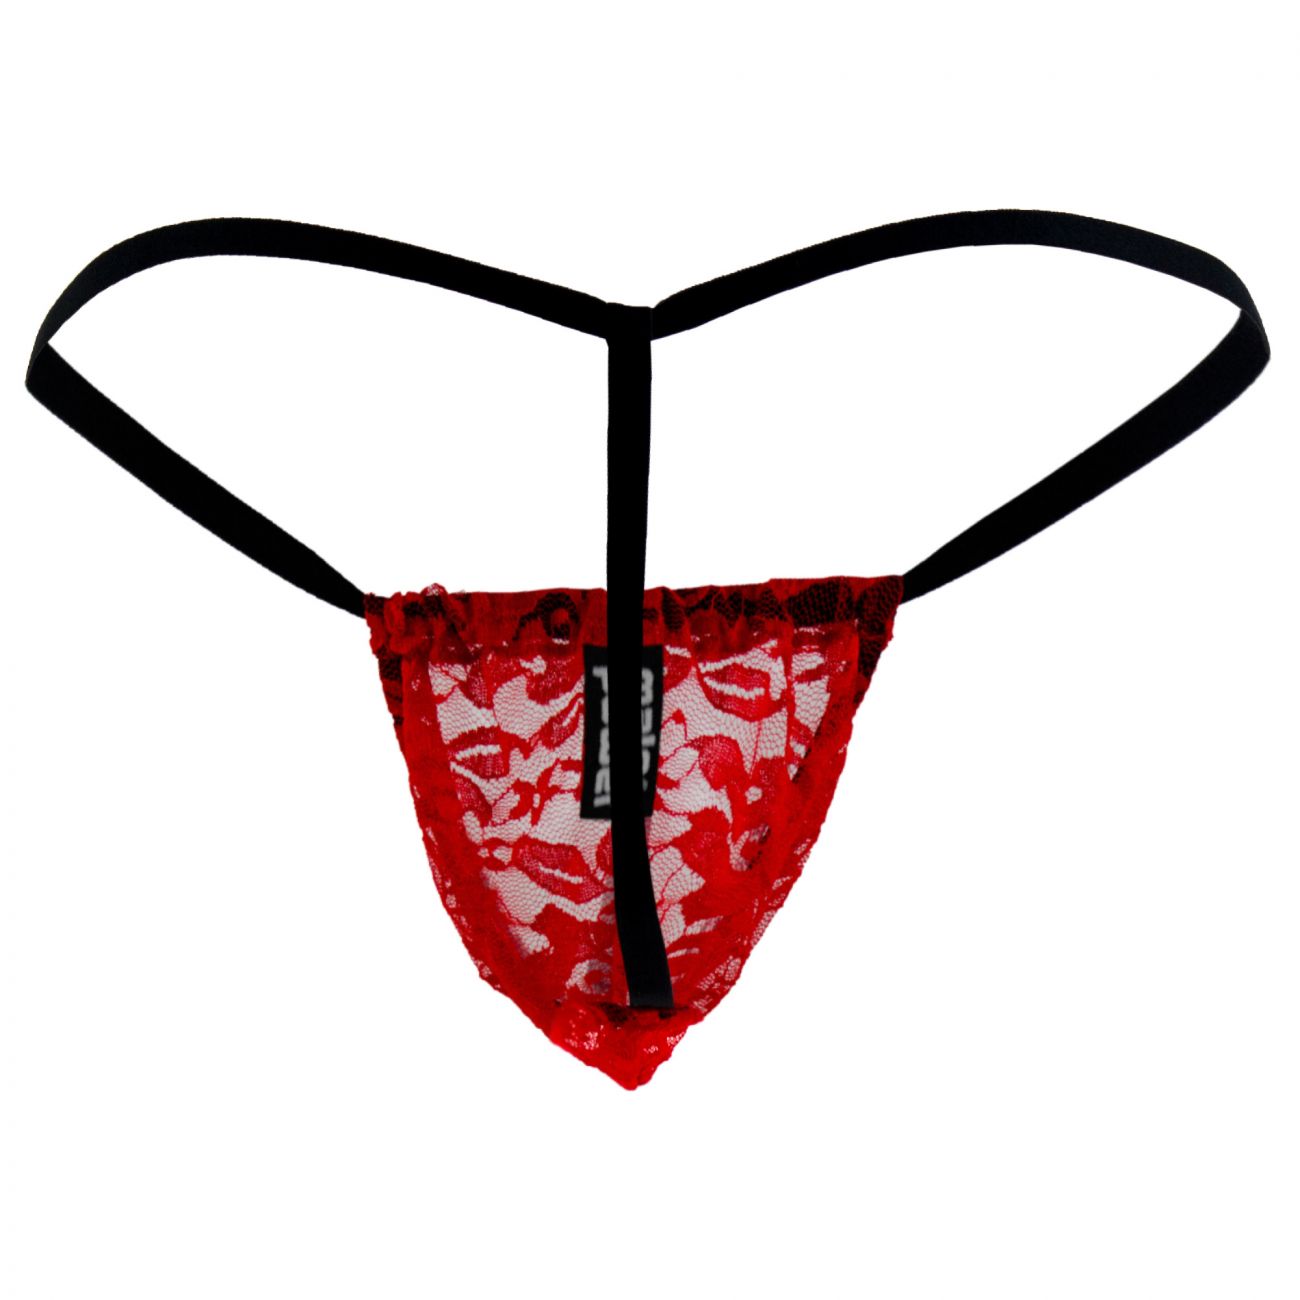 Mens Underwear: Male Power 450162 Stretch Lace Posing Strap Thong | eBay